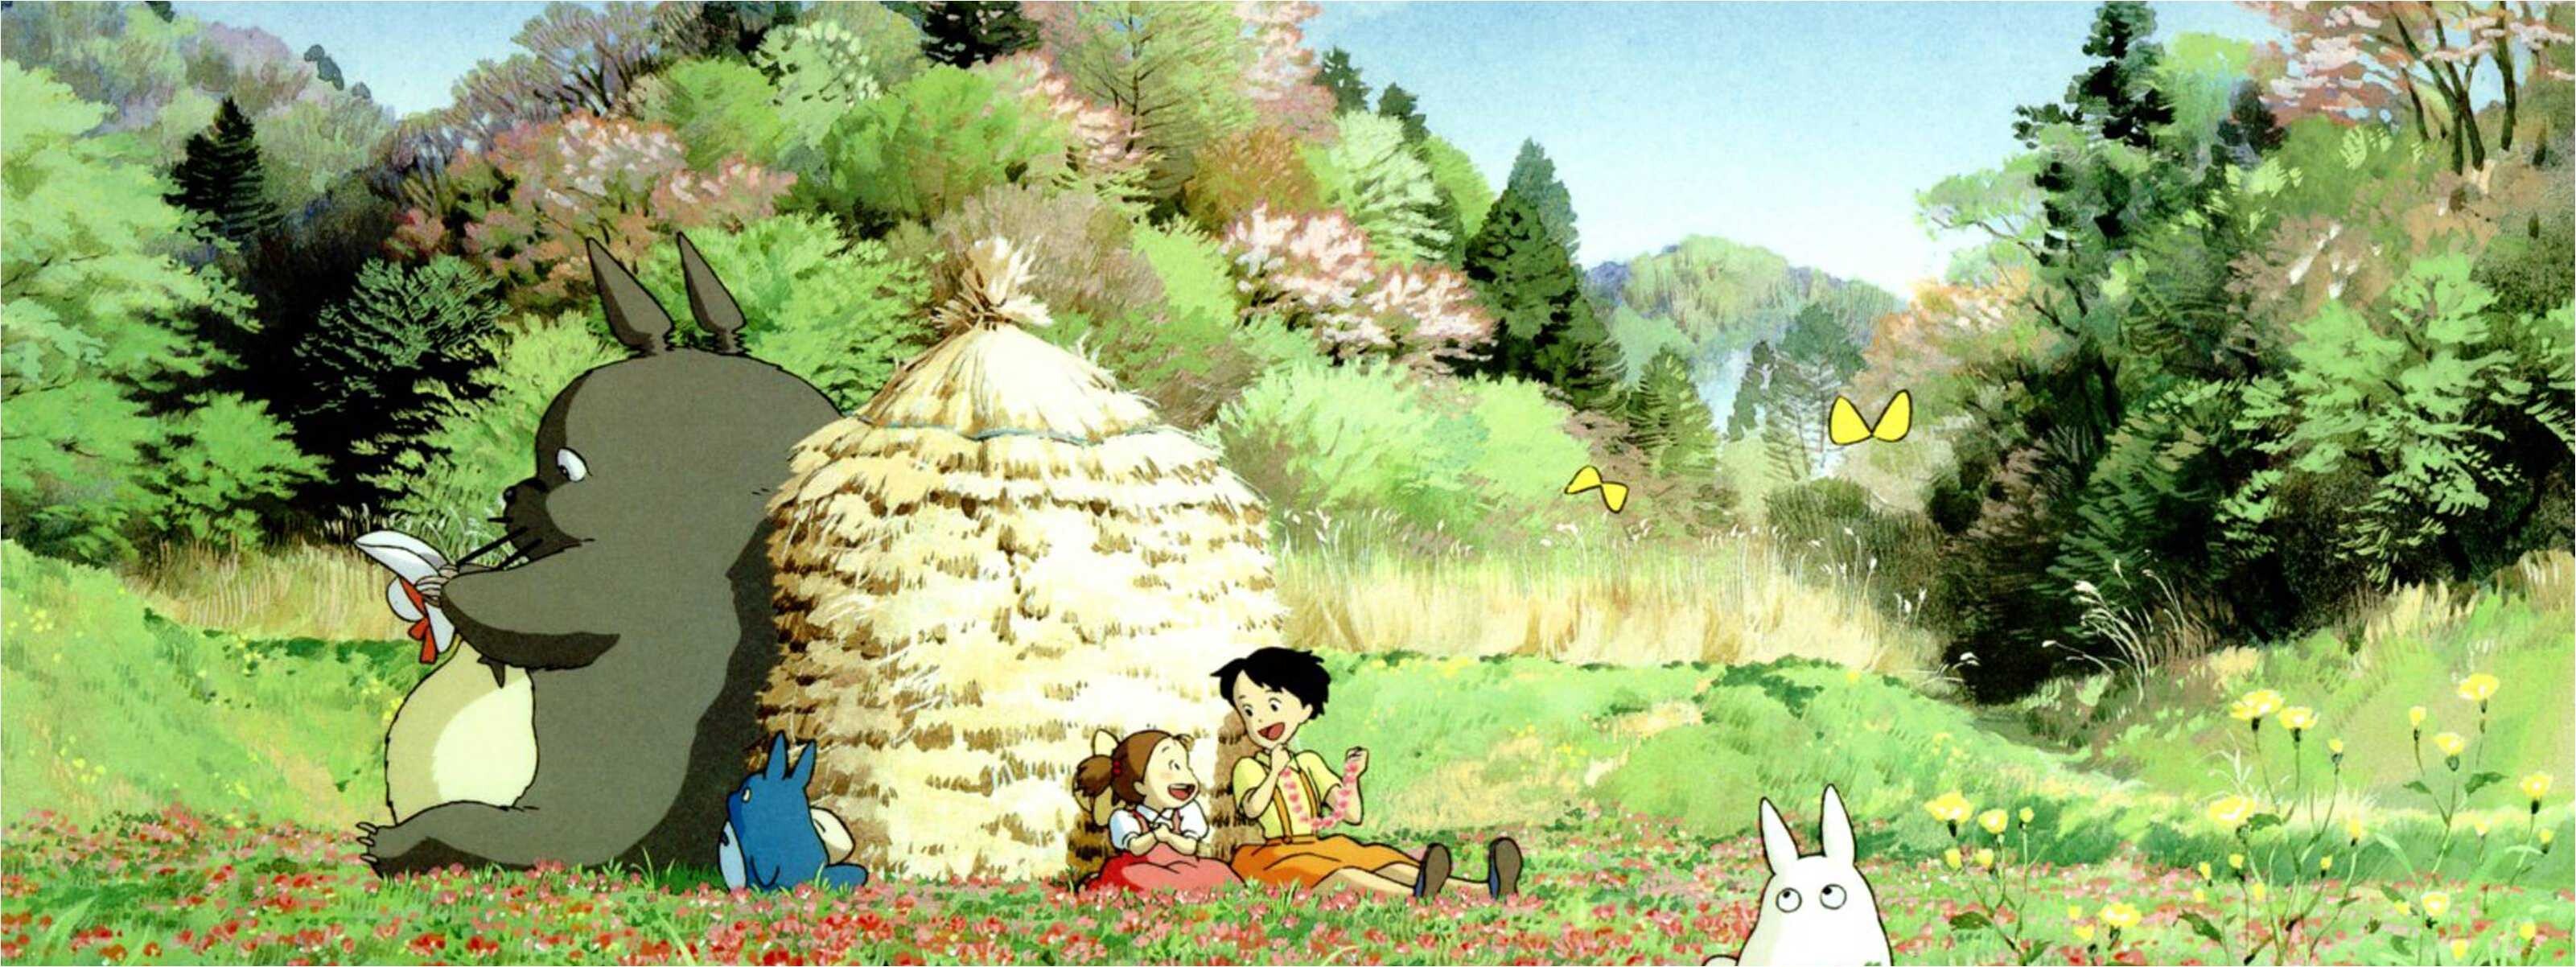 Studio Ghibli: The idea of Hayao Miyazaki, A Japanese animator, director, producer, screenwriter, author, and manga artist. 3210x1210 Dual Screen Wallpaper.